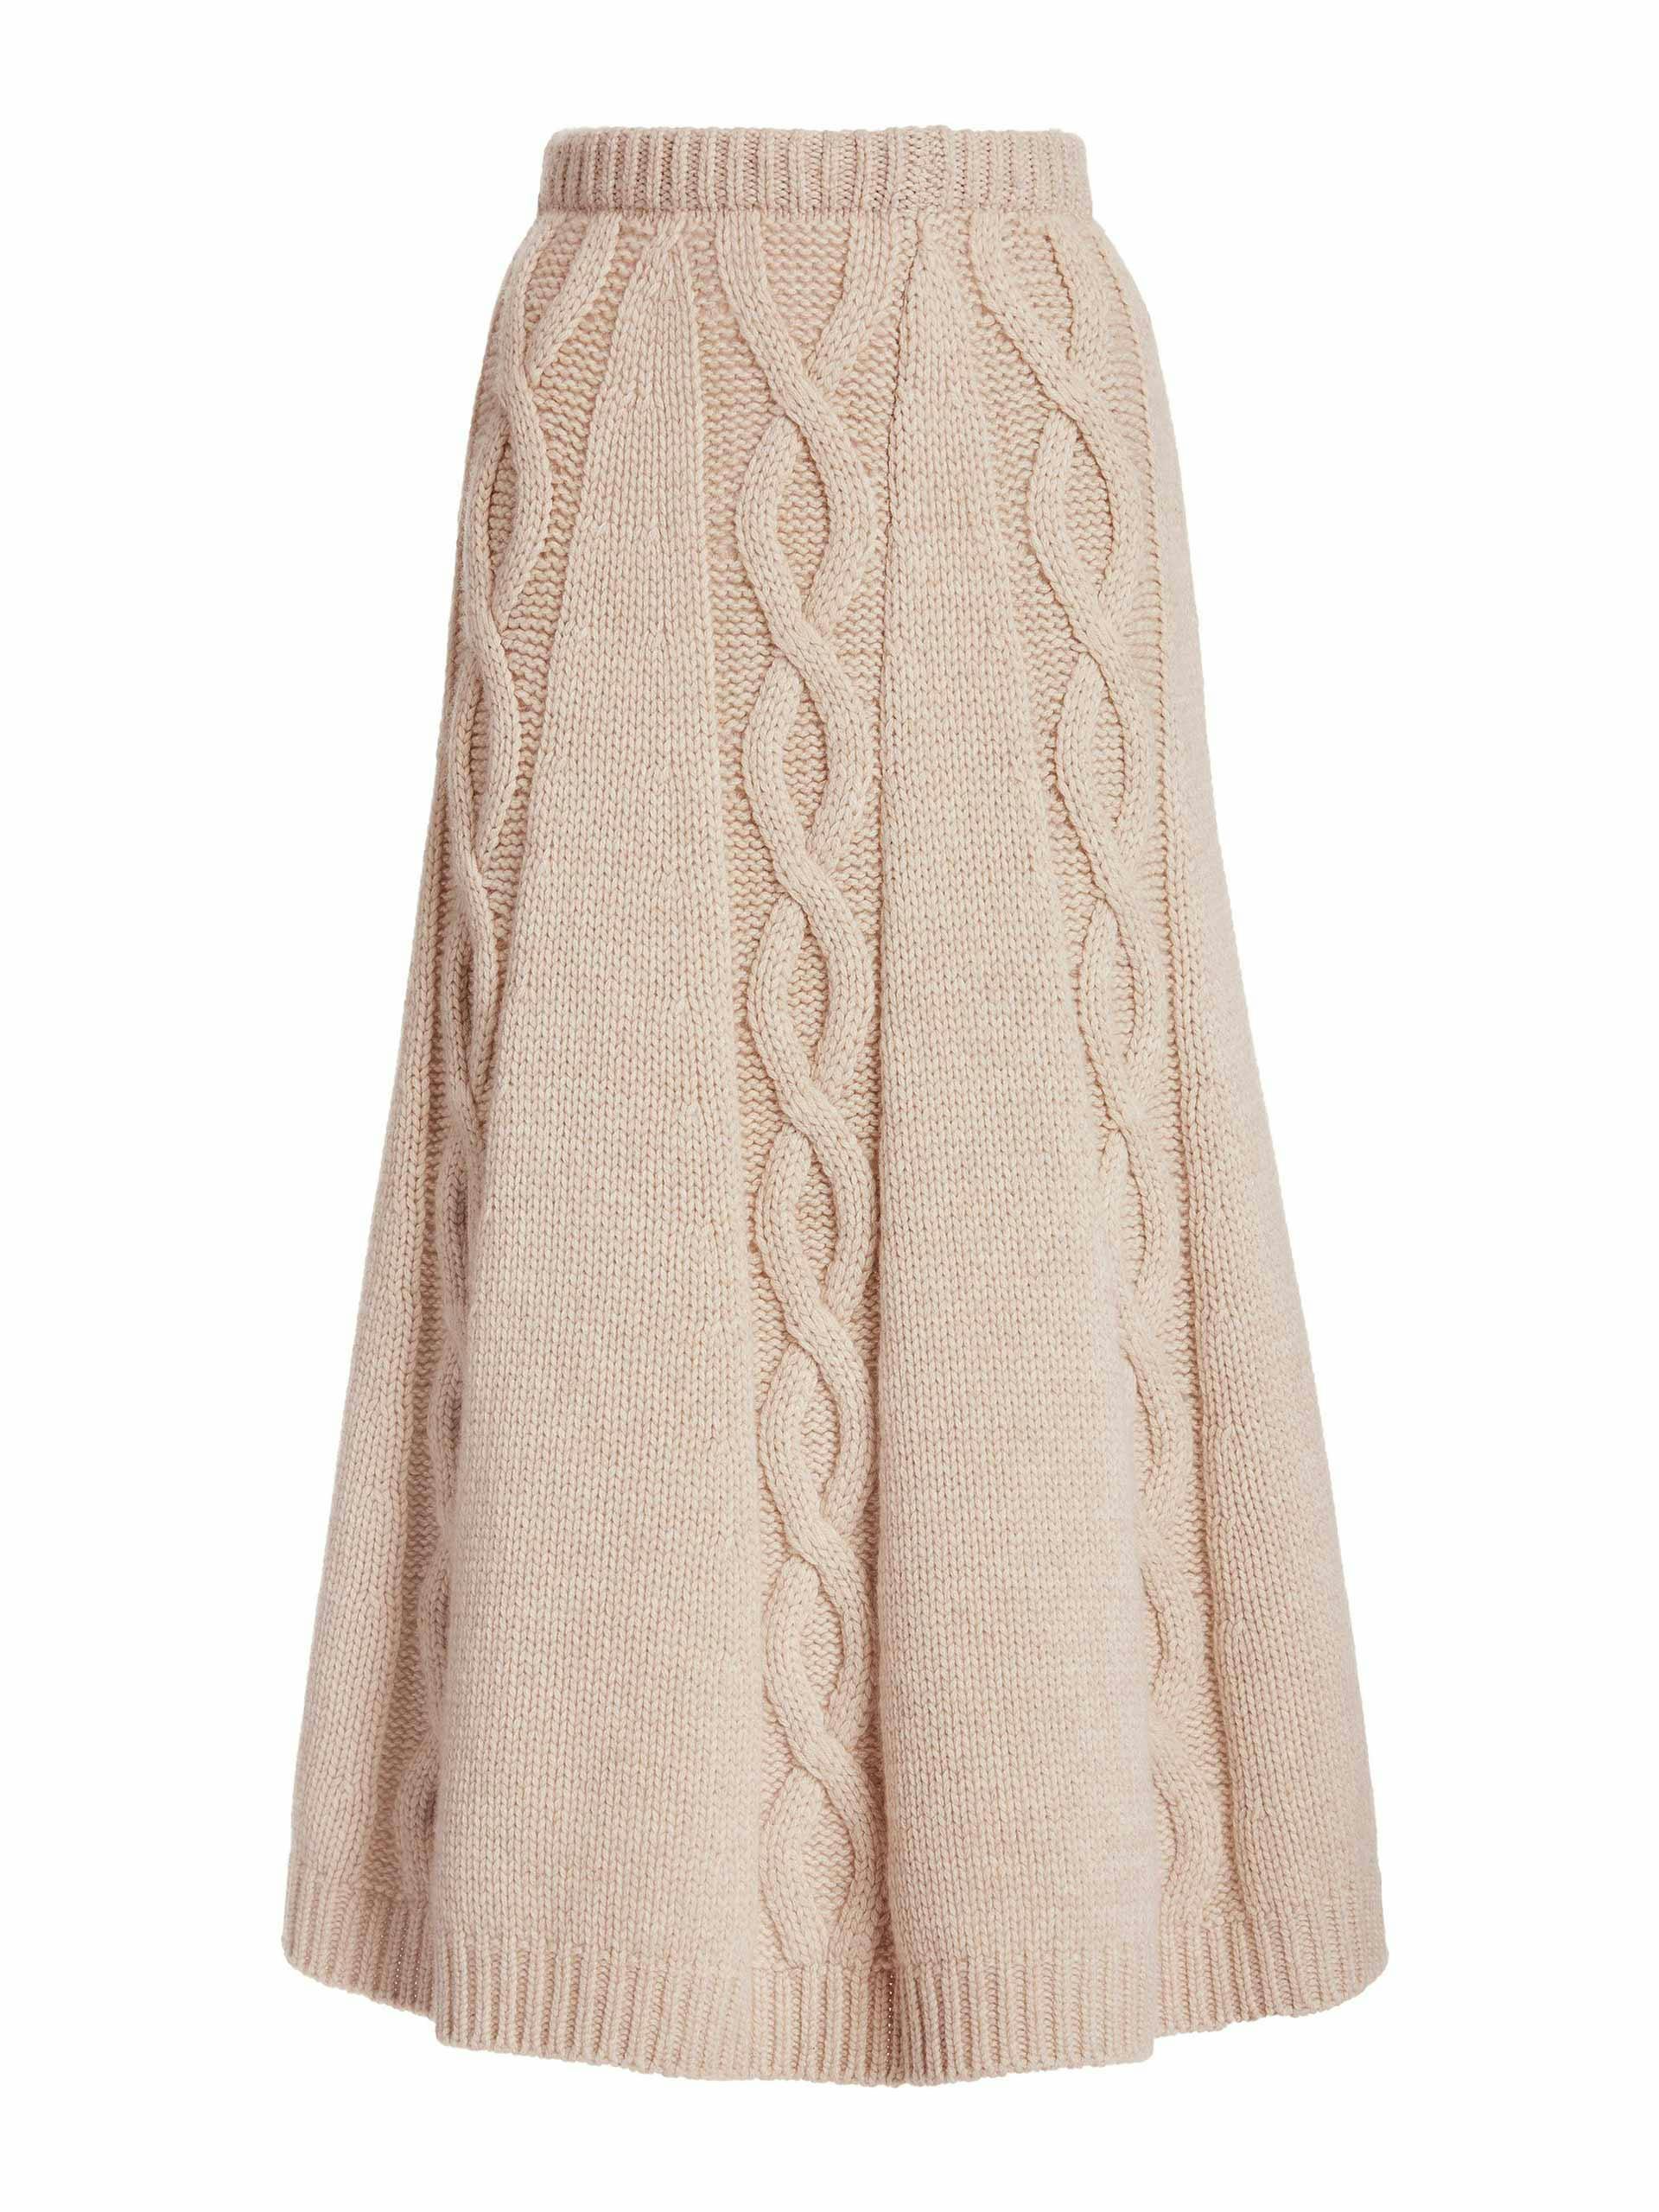 Pink cashmere skirt